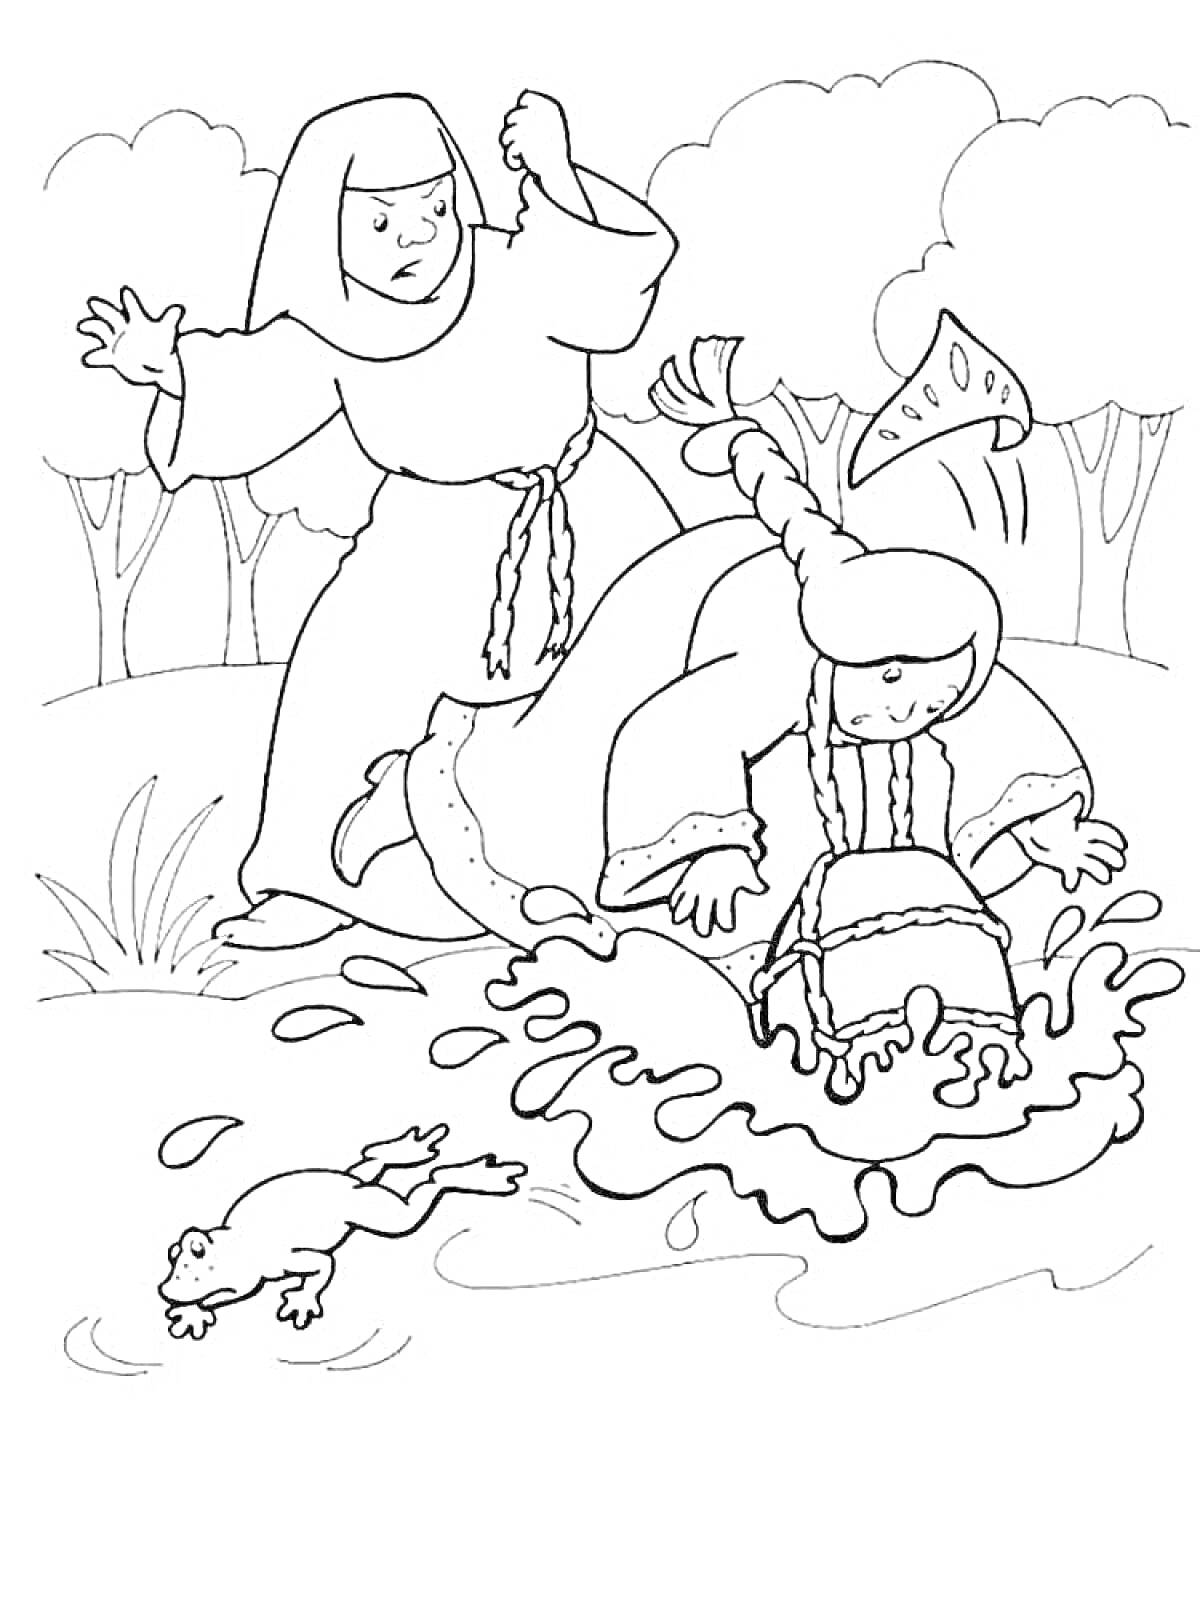 Раскраска Аленушка плачет над лягушкой, рядом злая женщина в лесу